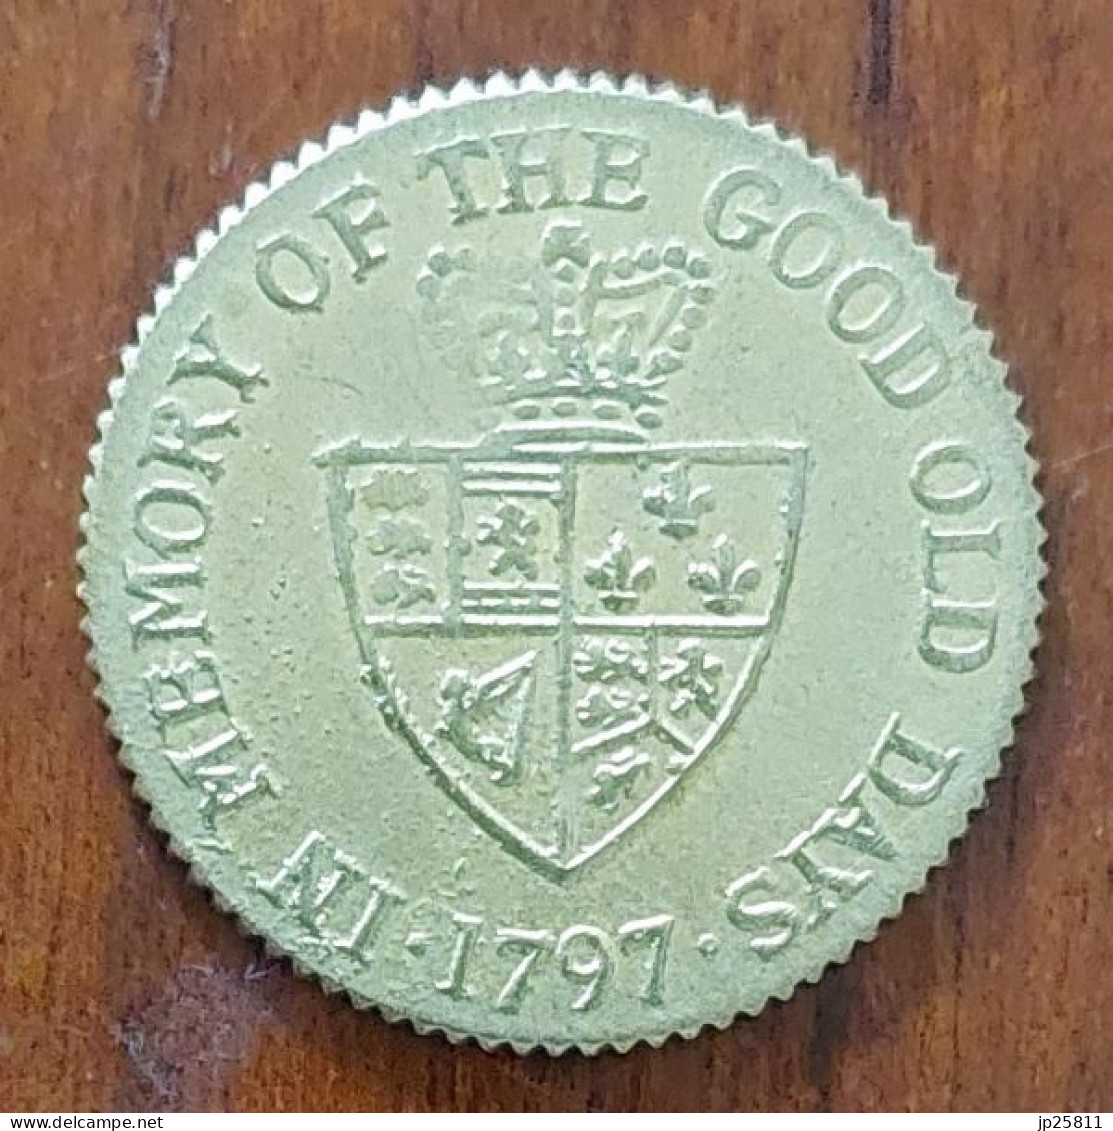 UK England - Medal George III - To Identify